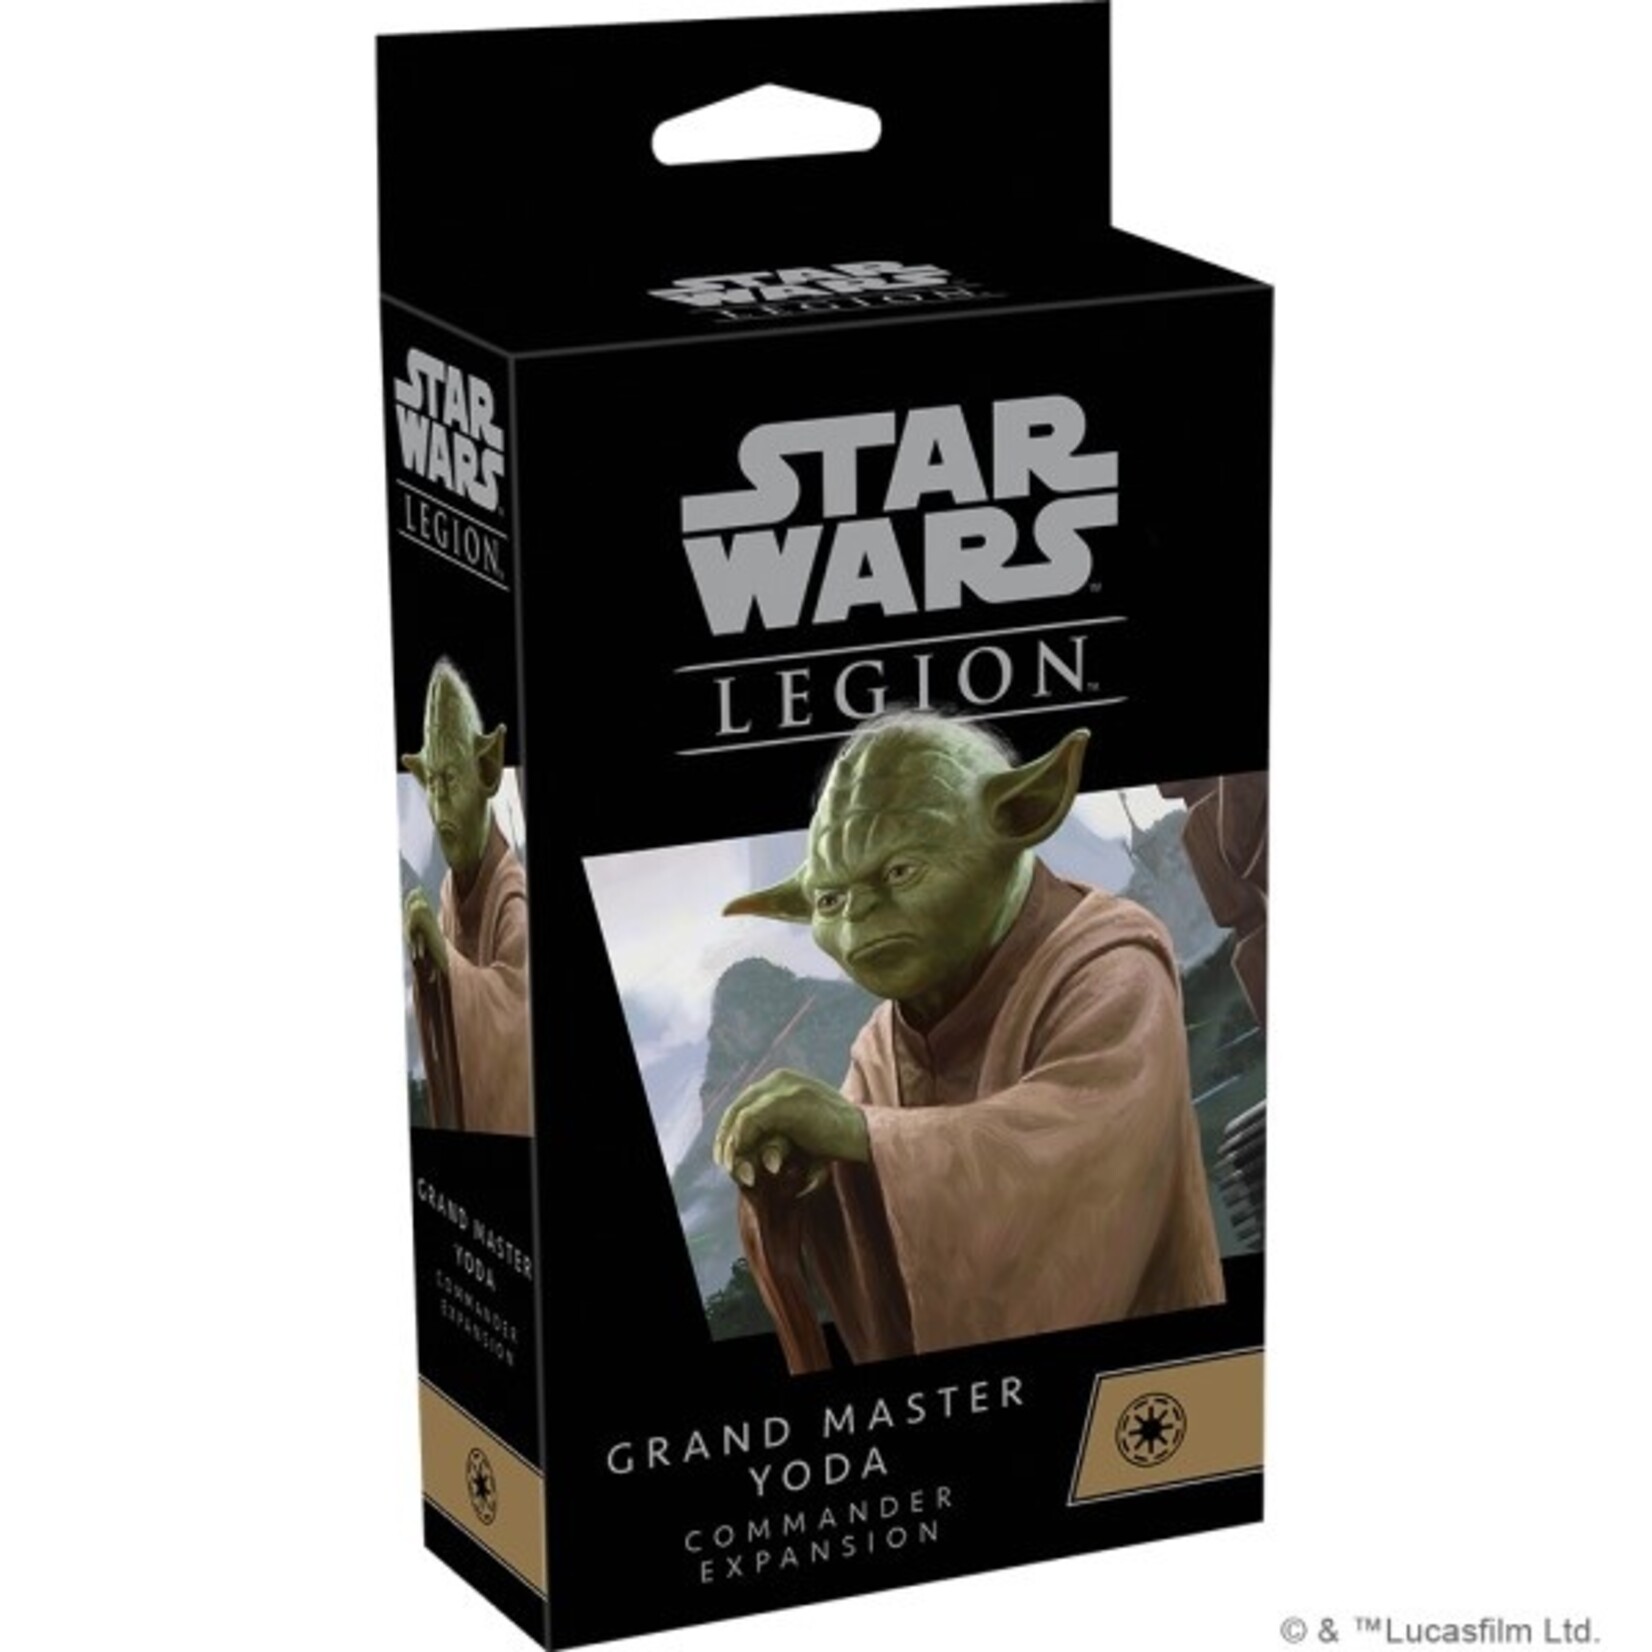 Star wars: Legion Grand Master Yoda Commander expansion